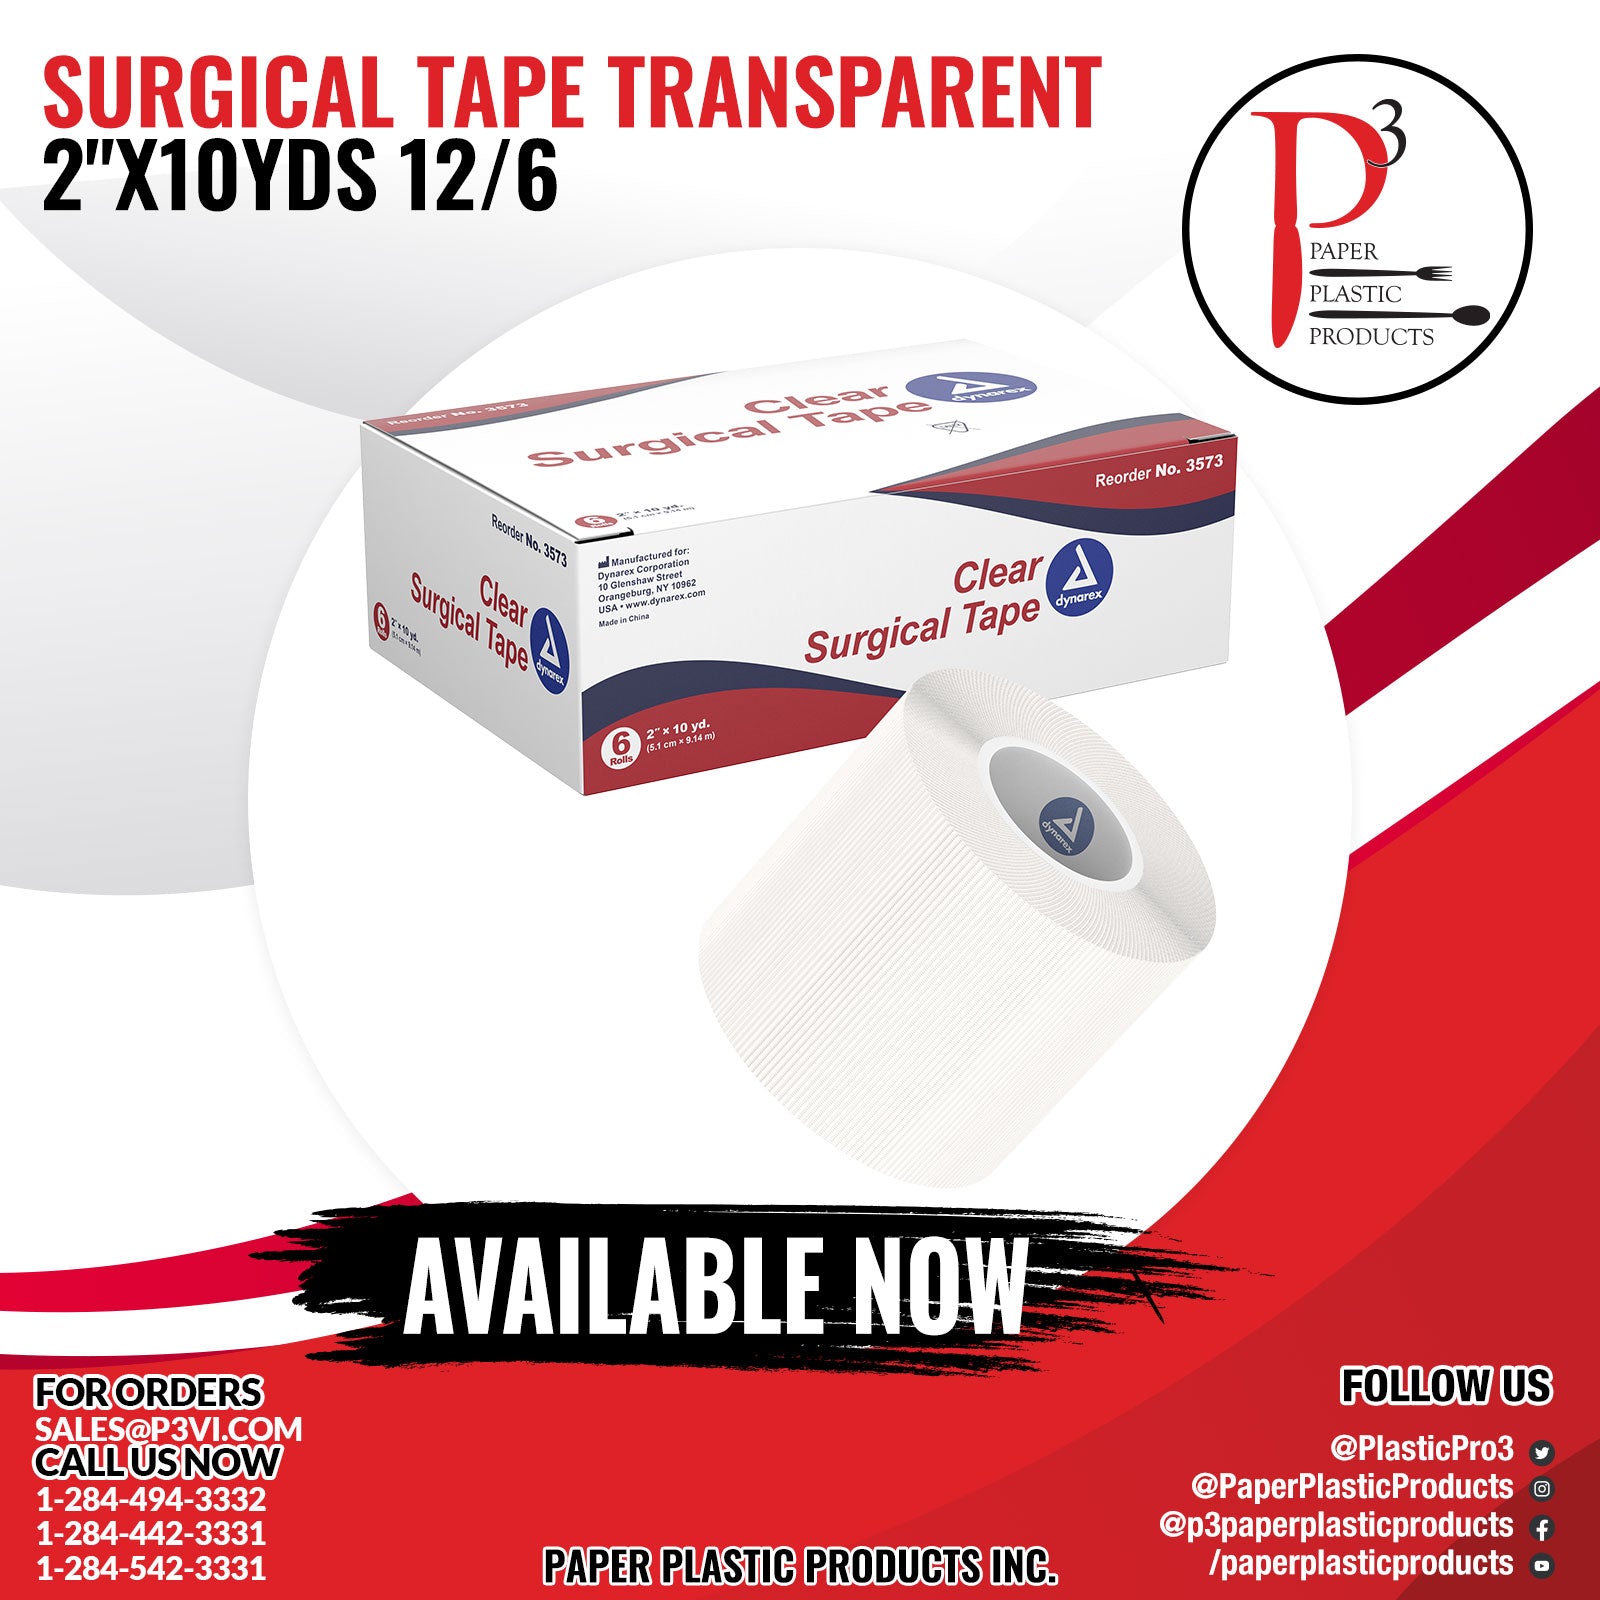 Surgical Tape Transparent 2"x10yds 12/6